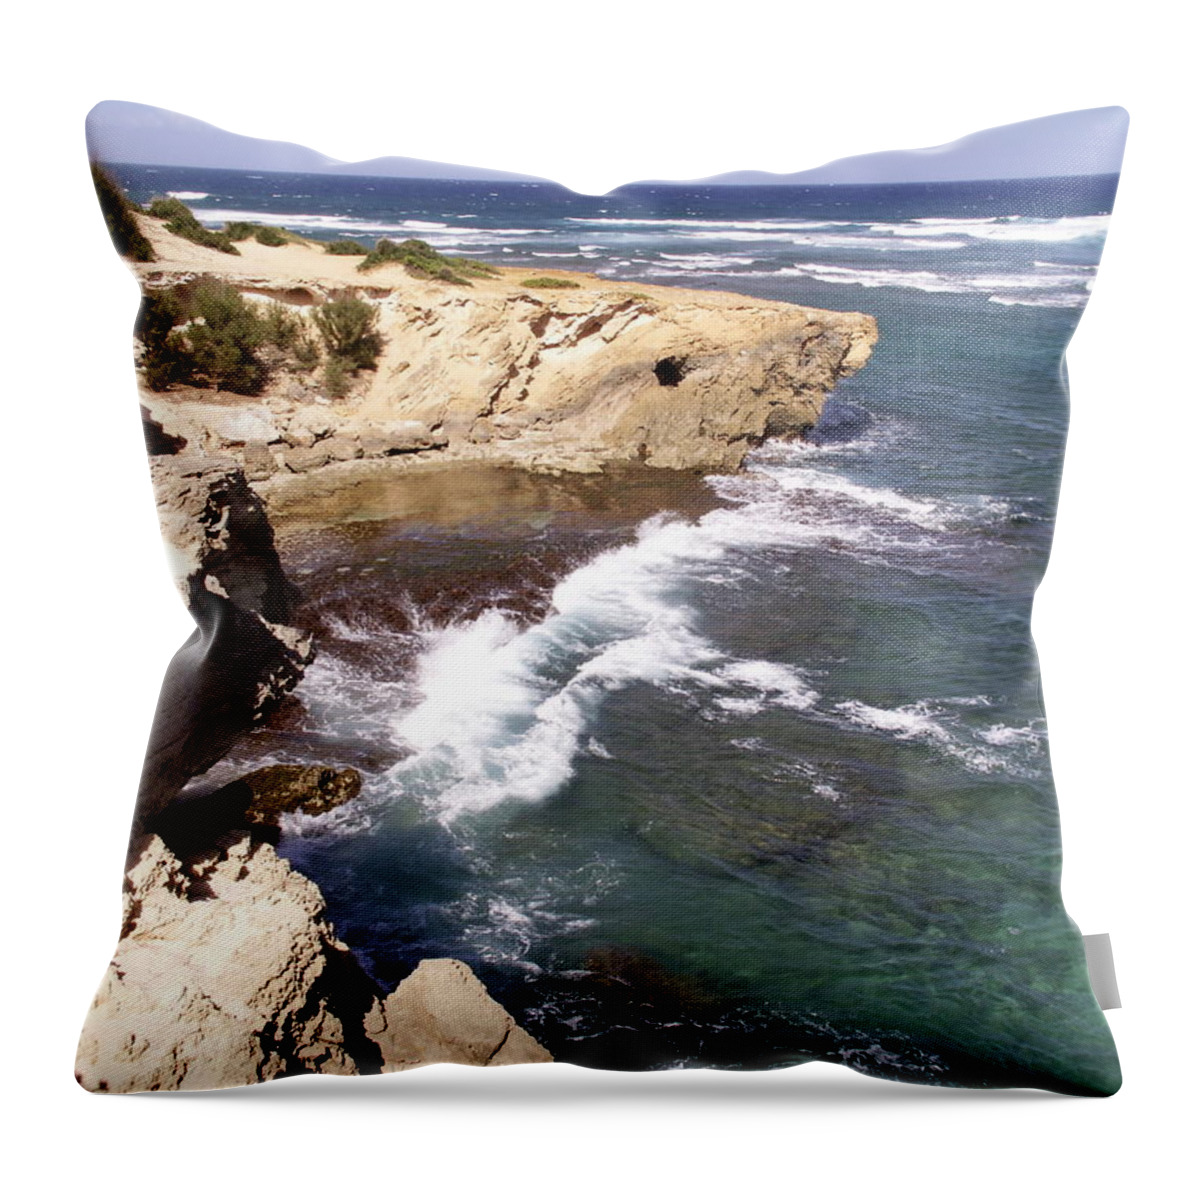 Kauai Throw Pillow featuring the photograph Kauai Coast with Shark outcrop by Amy Fose